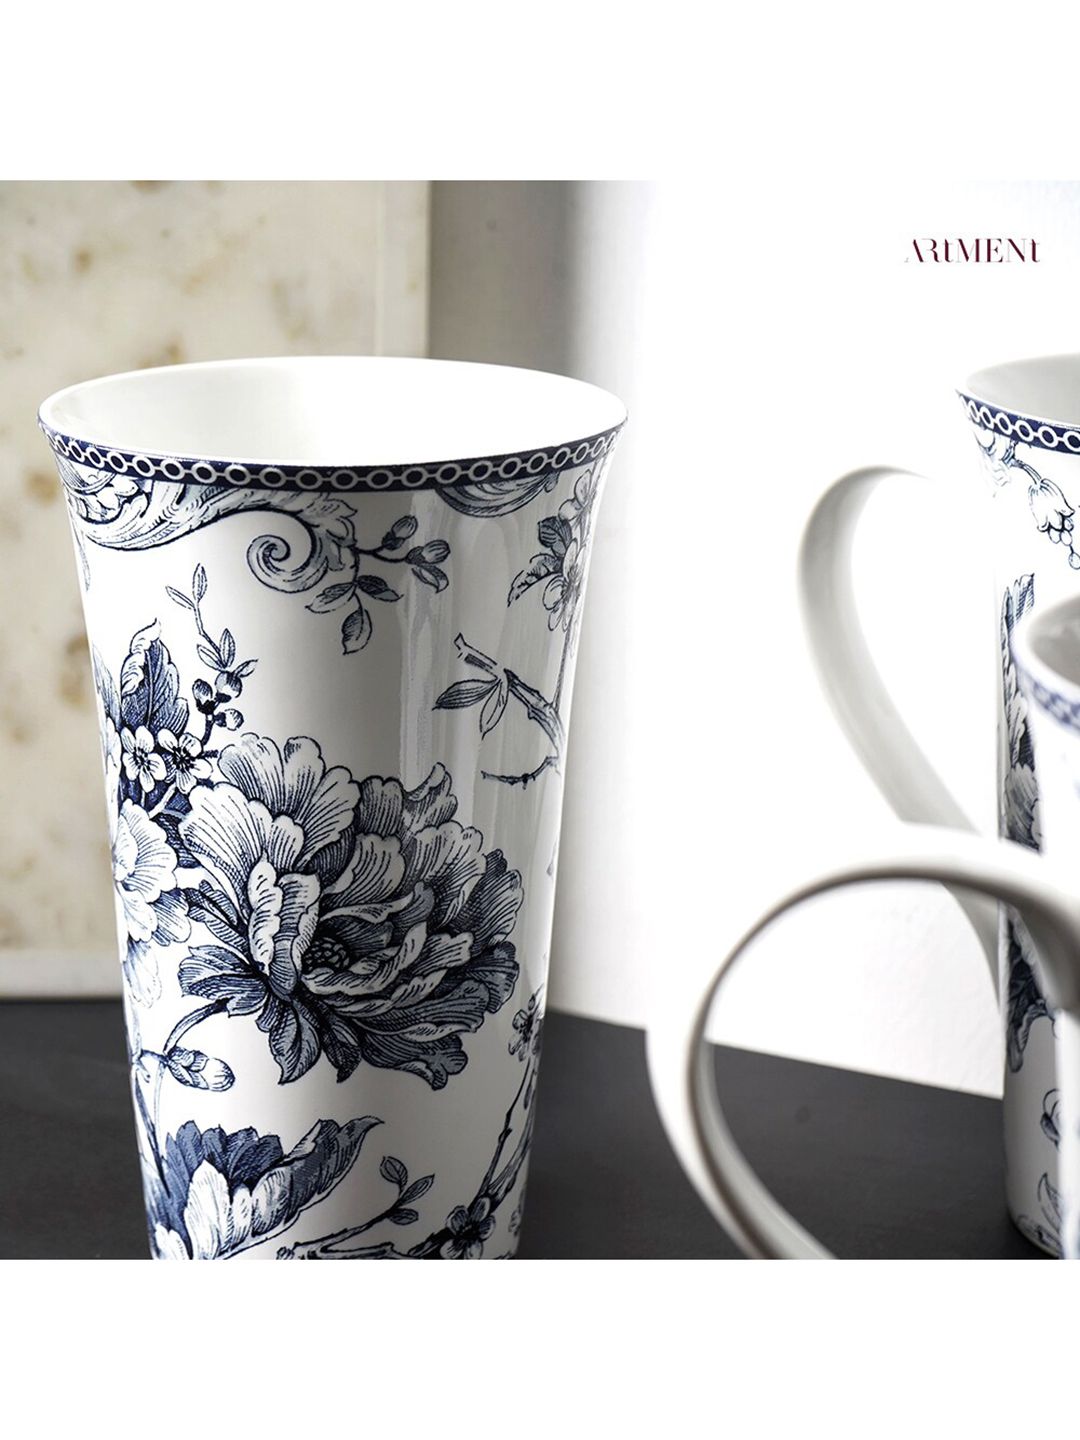 THE ARTMENT White & Navy Blue Printed Ceramic Vintage Victorian Kraak Mug Price in India